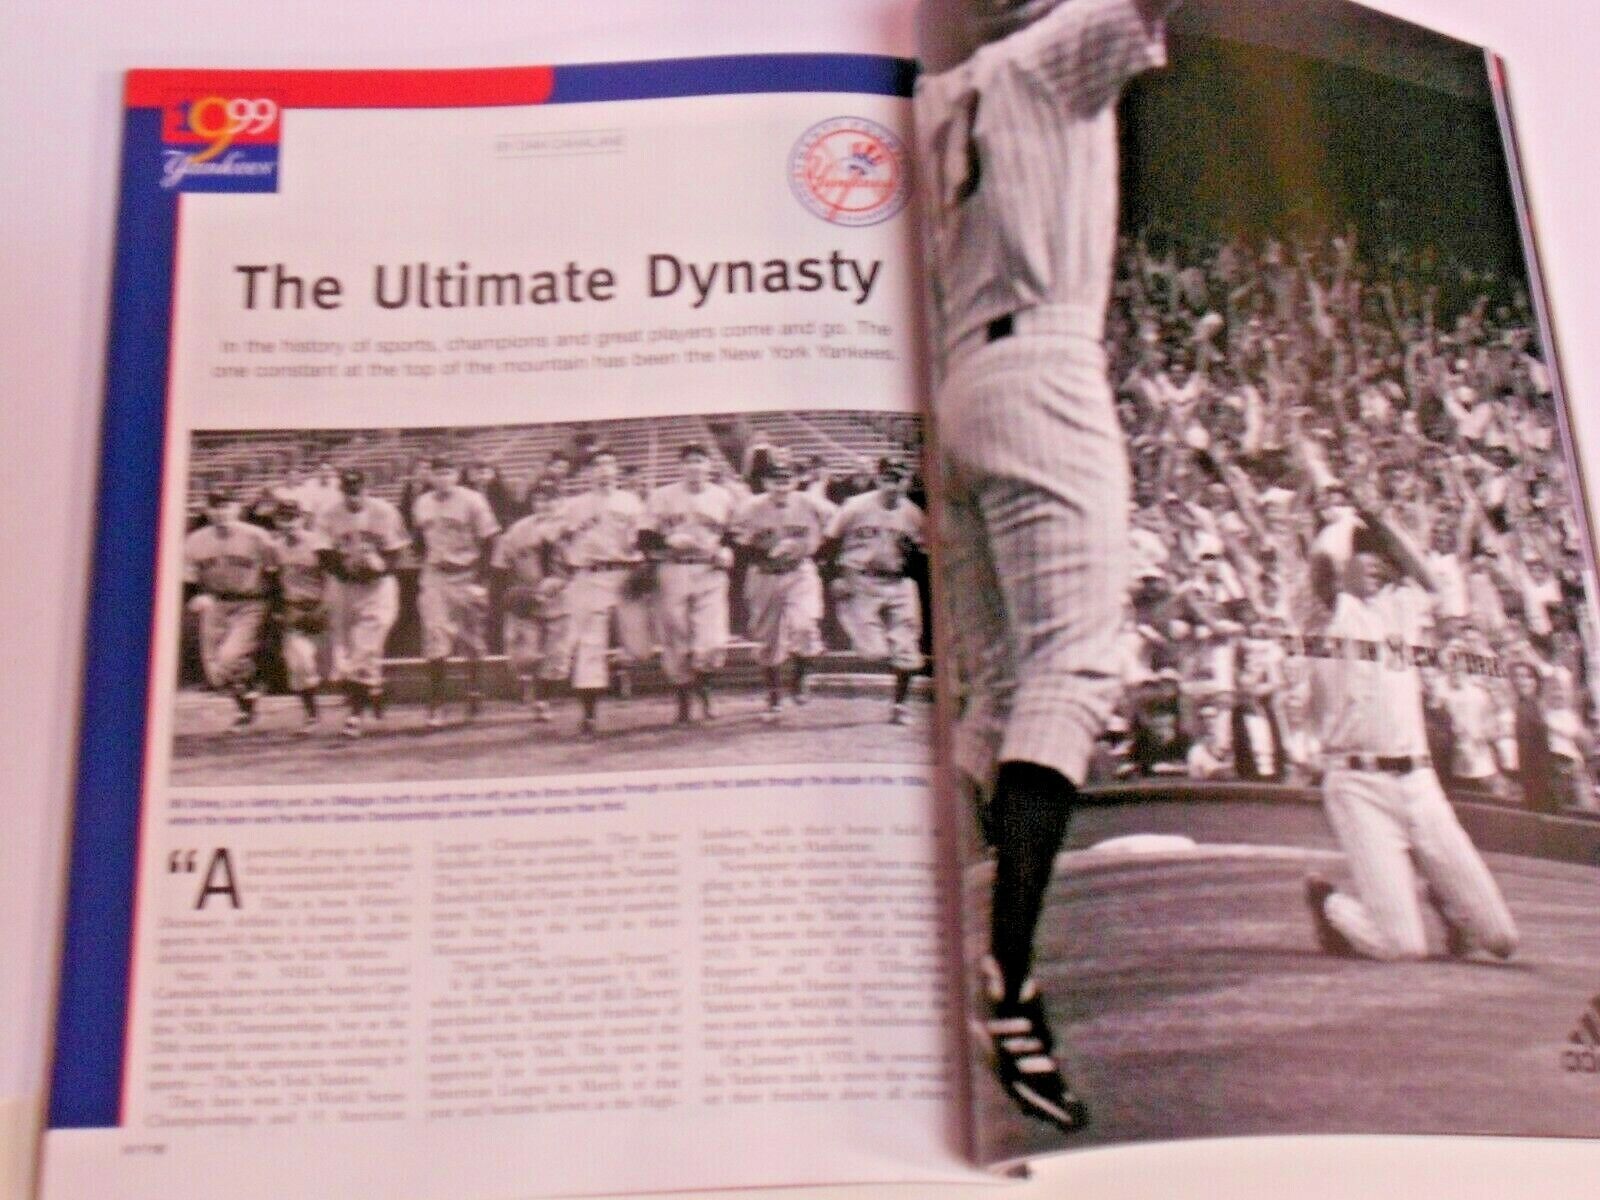 1999 American League Championship Series Program Yankees vs. Red Sox